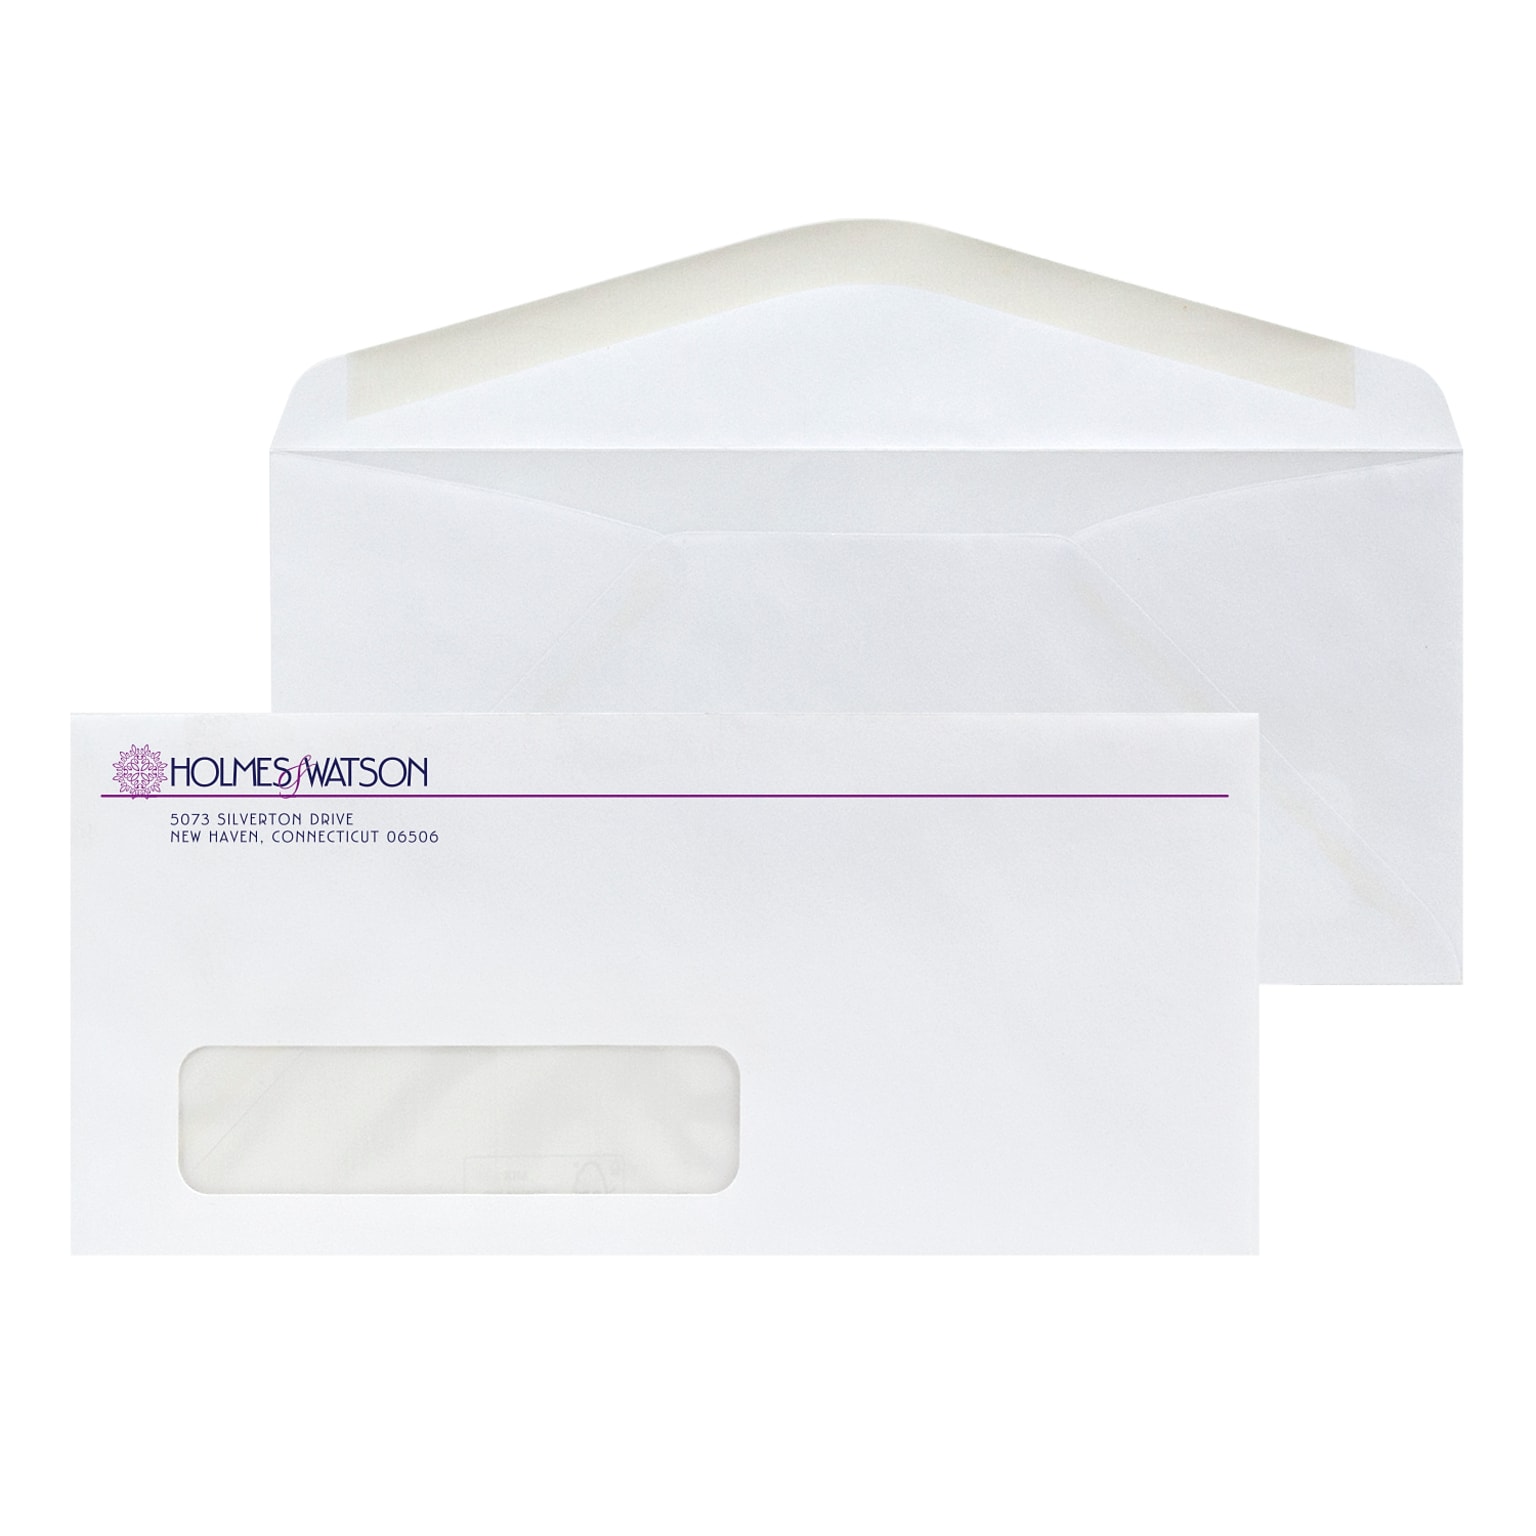 Custom #10 Window Envelopes, 4 1/4 x 9 1/2, Recycled 24# White Wove with EarthFirst/SFI Logo, 2 Custom Inks, 250 / Pack